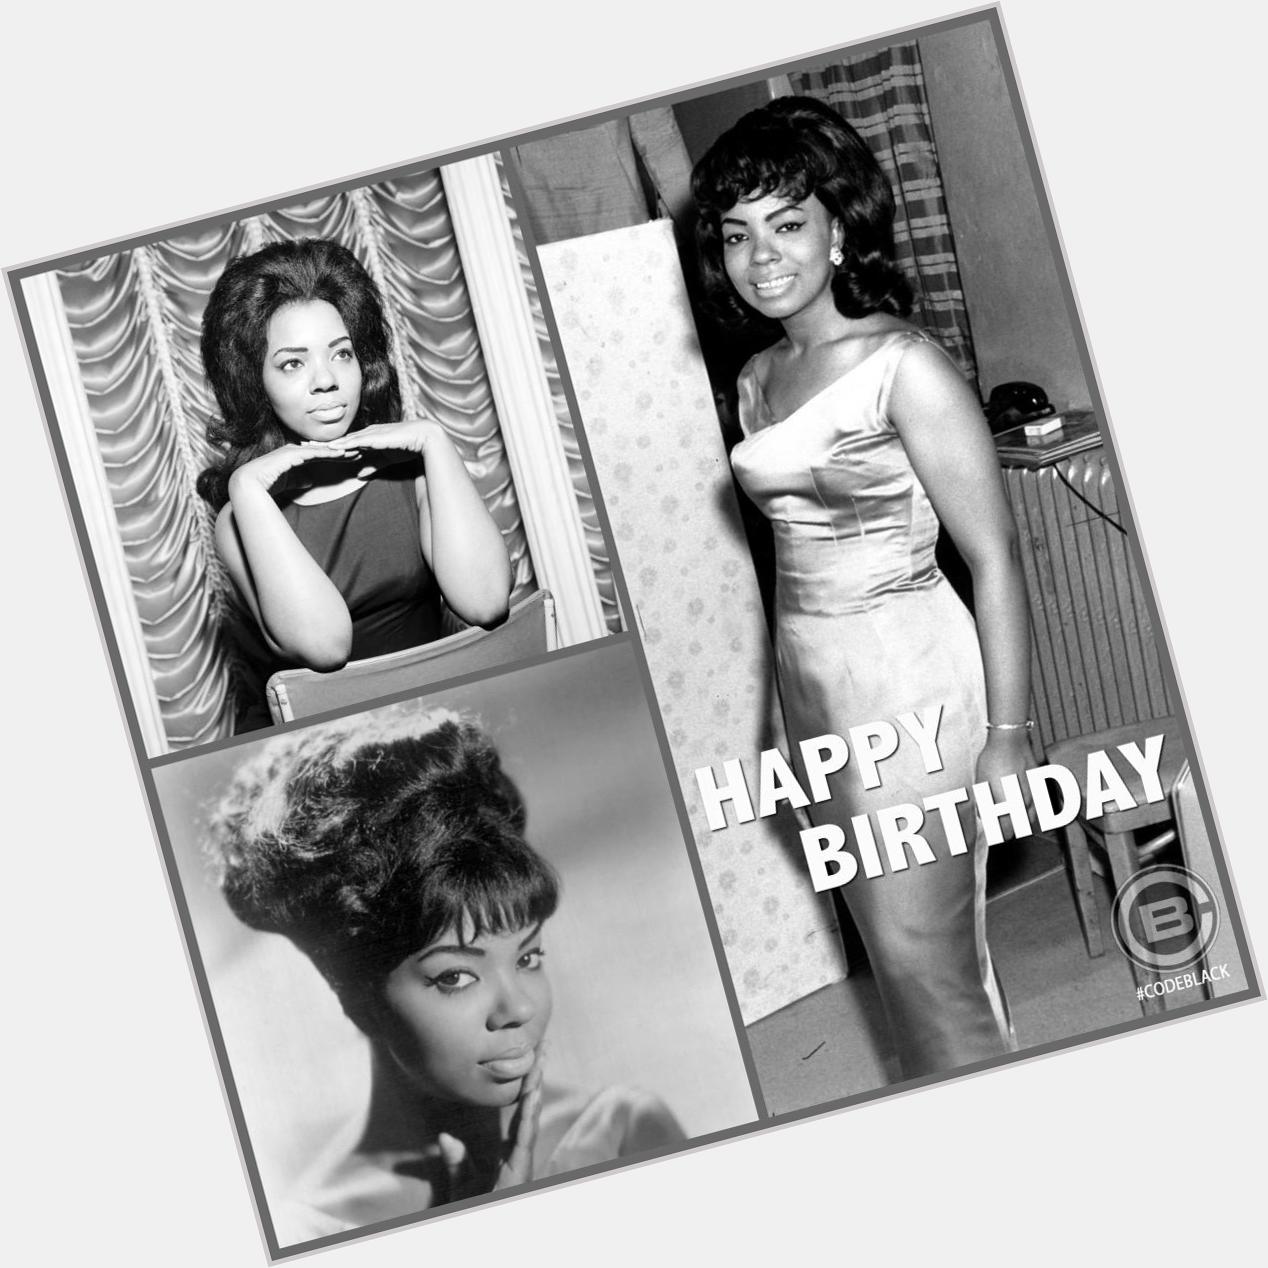 Happy Birthday to Motown royalty, Mary Wells. 